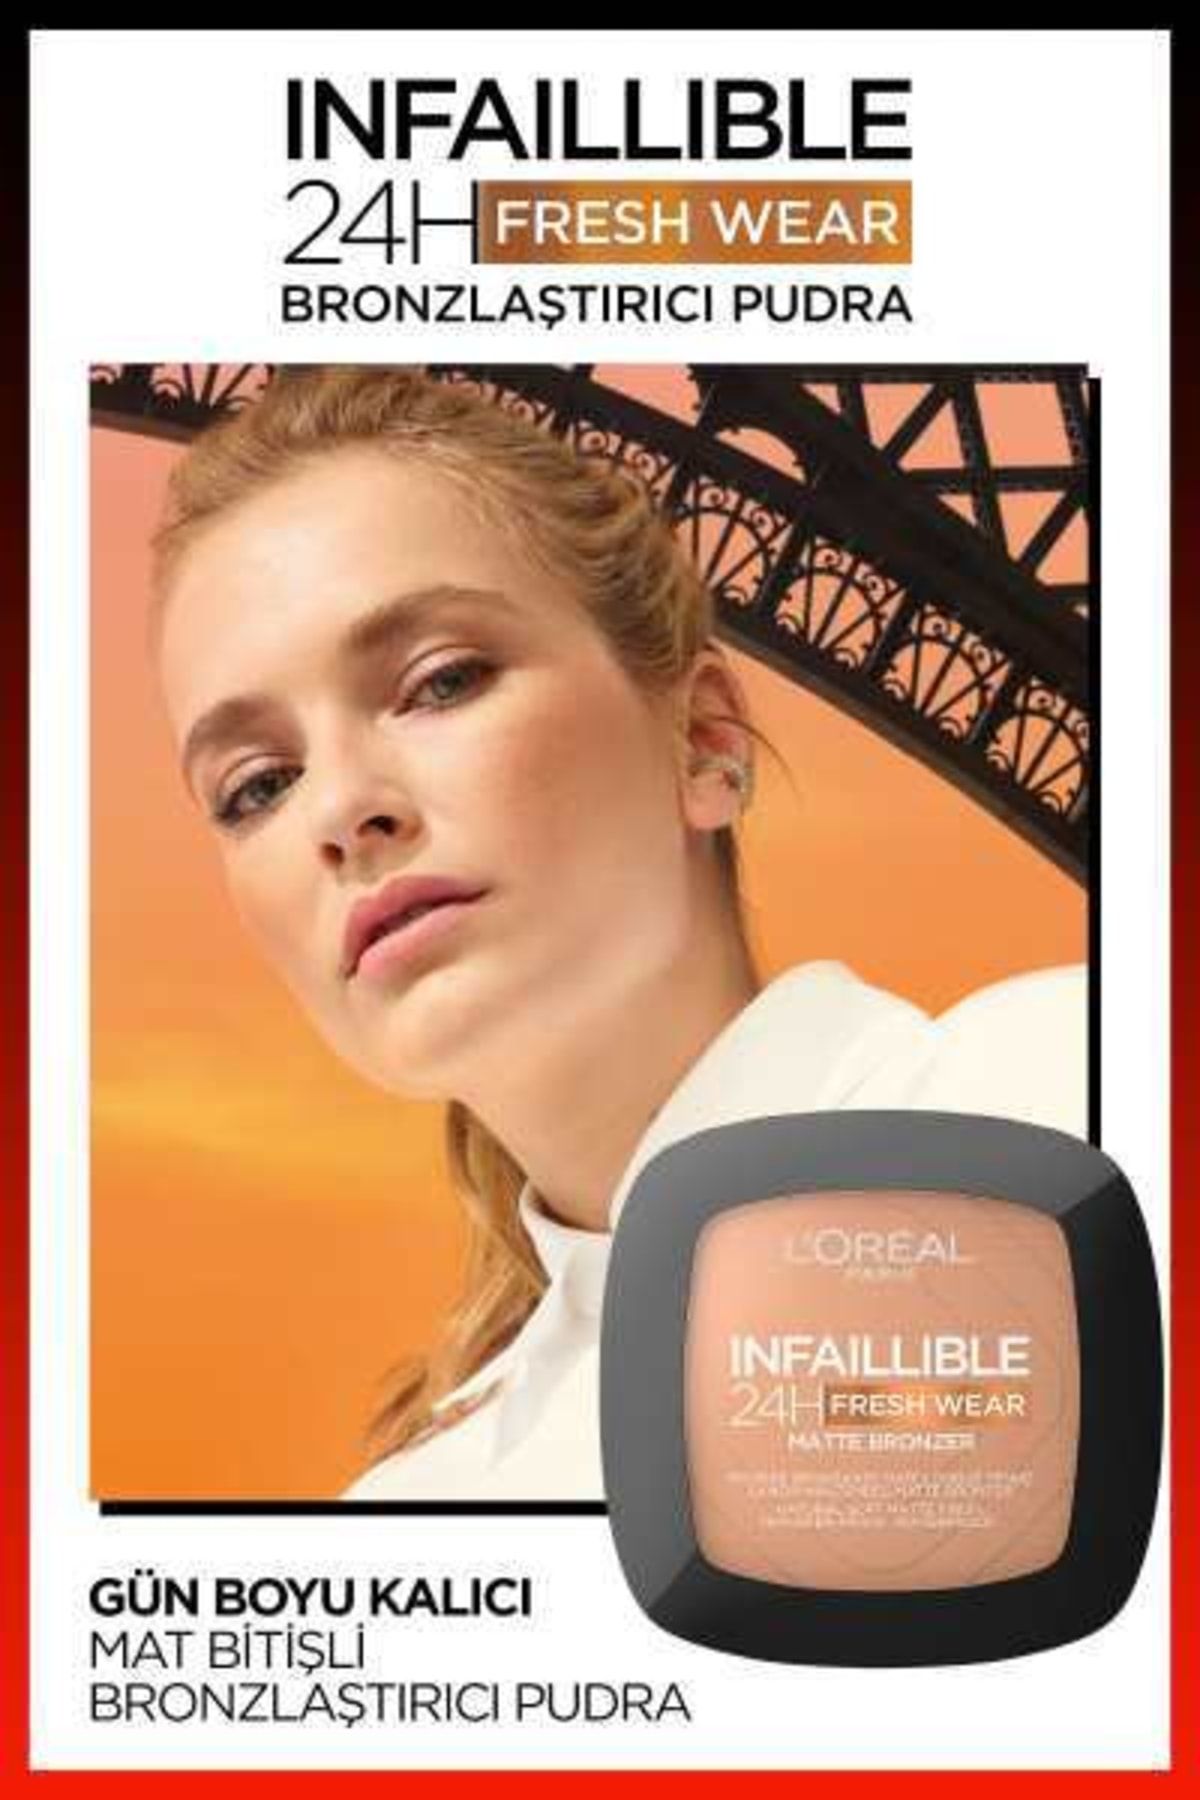 L'Oreal Paris پودر برنزه کننده Infaillible برنزه ای طبیعی و ماندگار 24ساعته شماره 300 رنگ سبک متوسط ​​